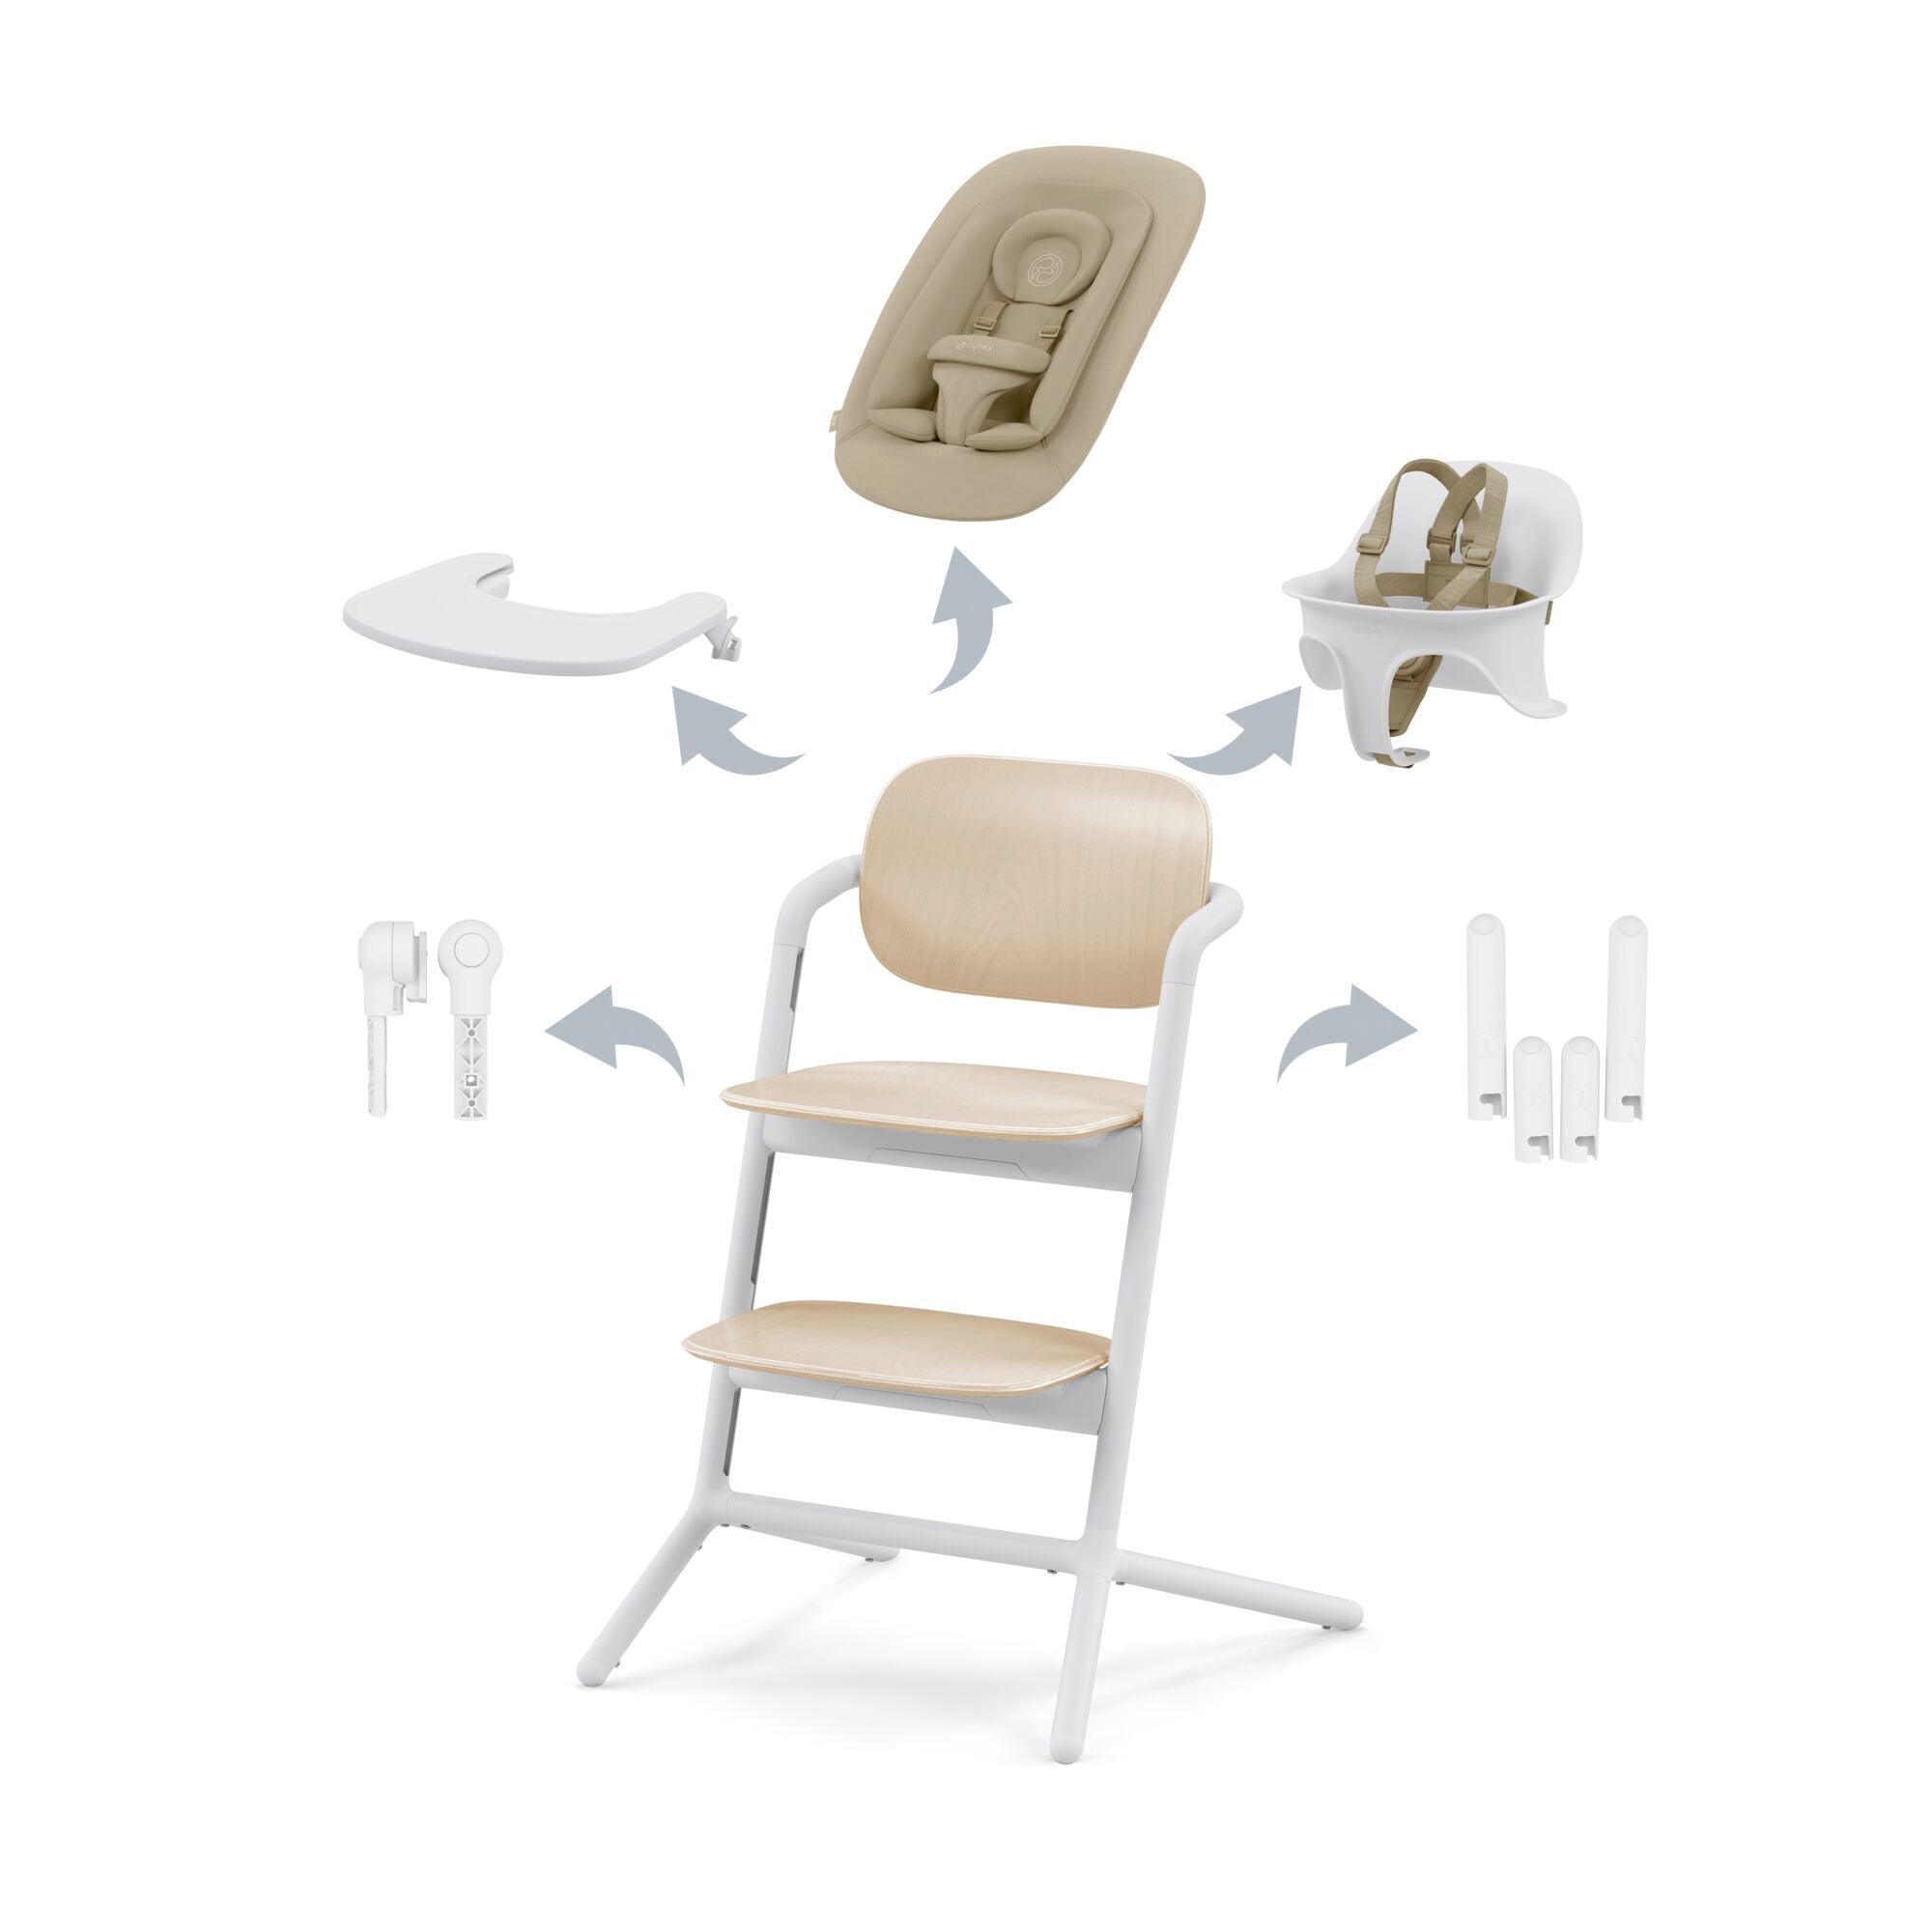 Cybex Lemo 2 High Chair 4-in-1 - ANB Baby -40638462210734 in 1 high chair